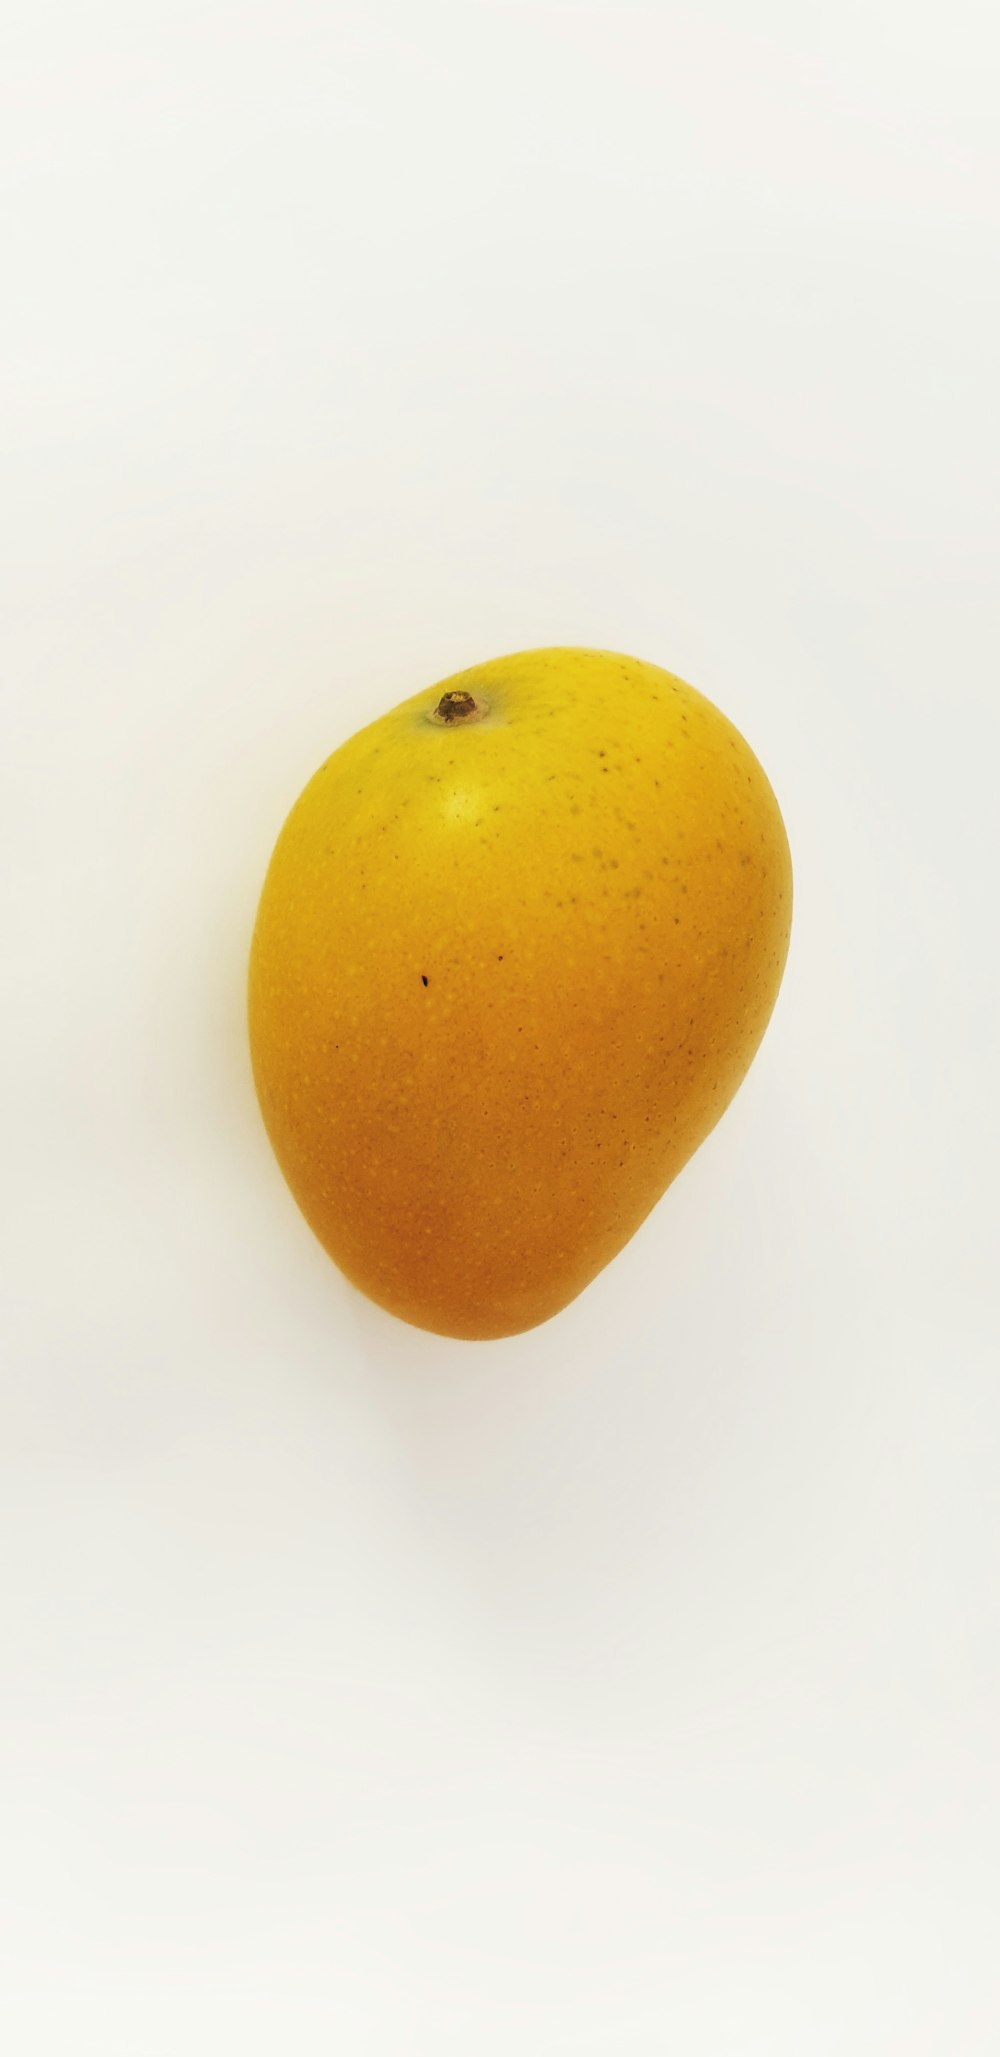 yellow round fruit on white surface